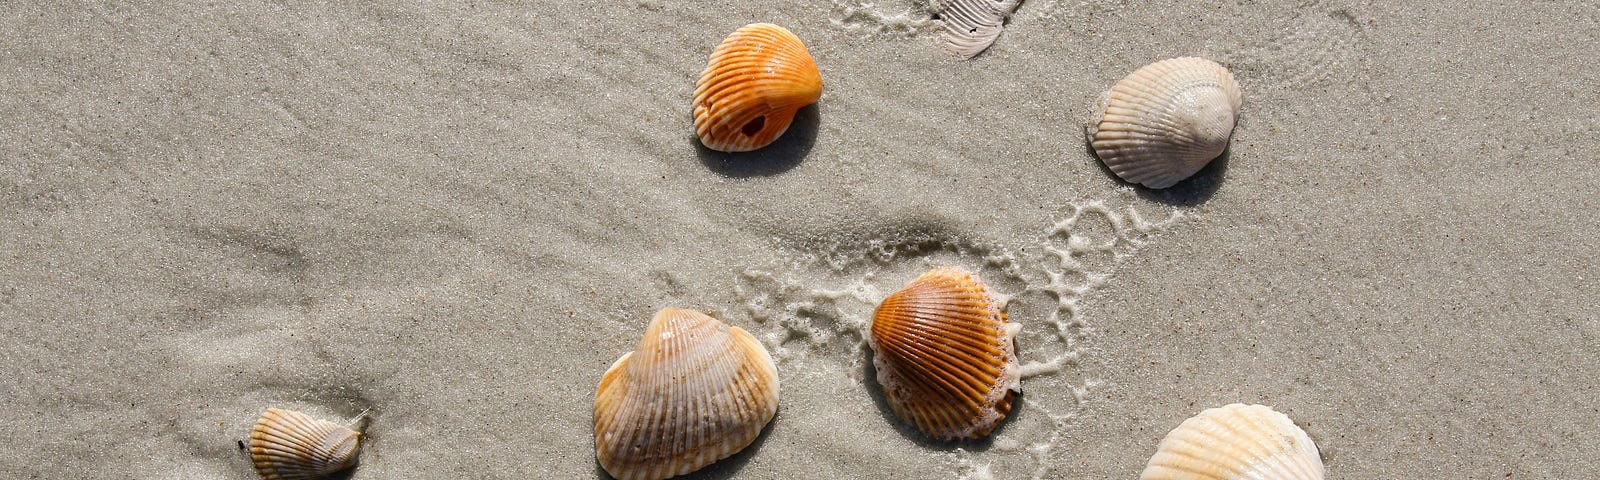 Seashells at a beach